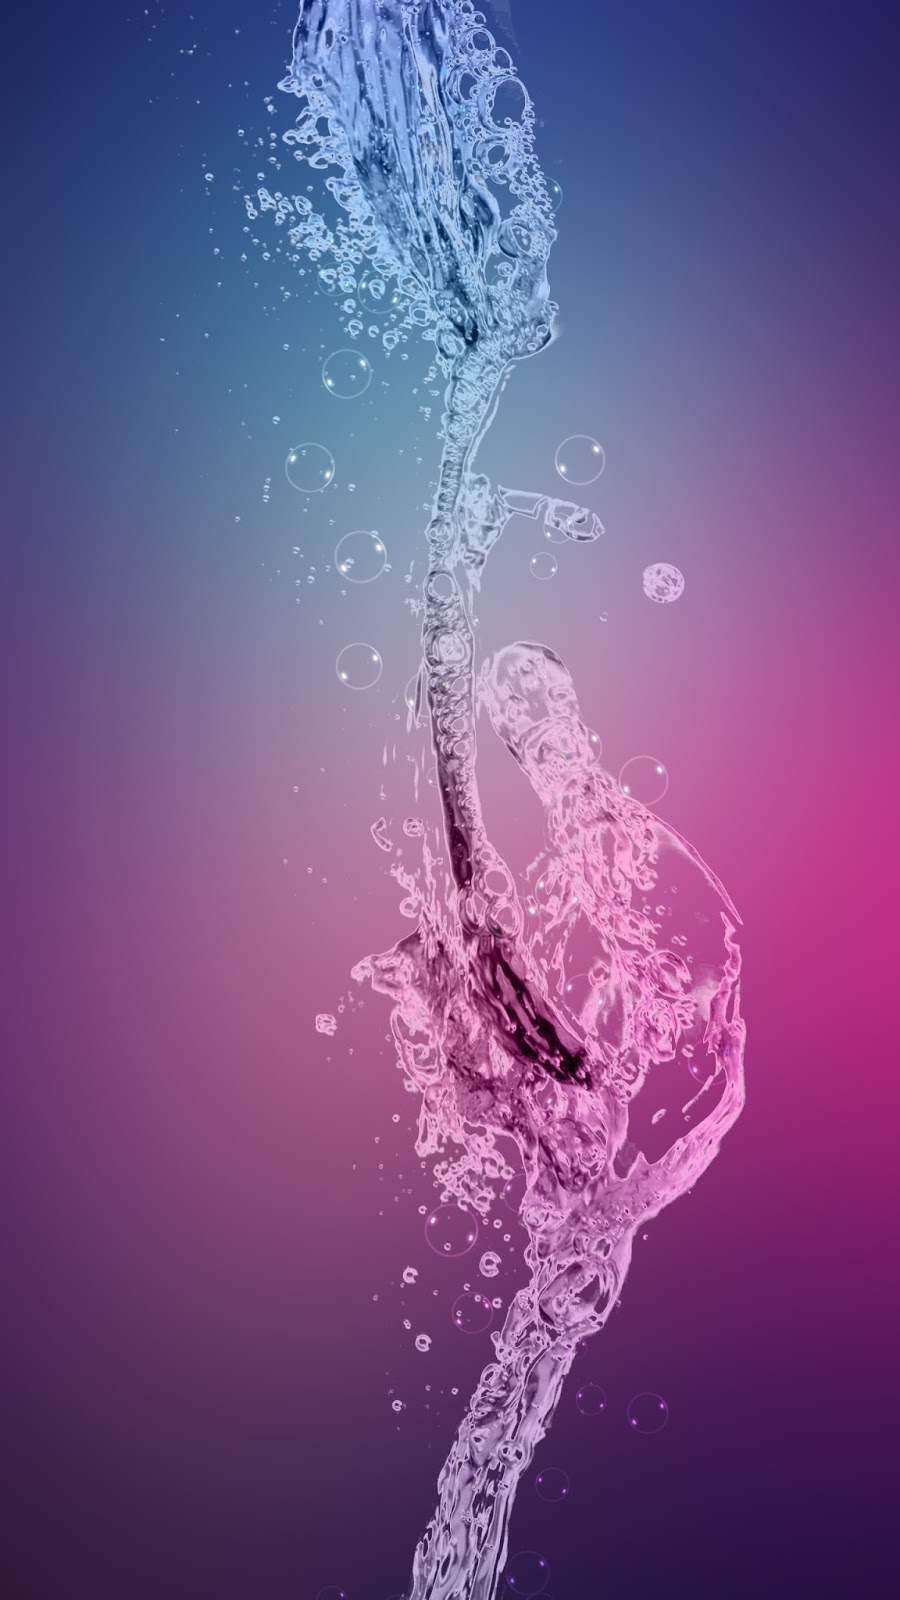 lg g5 wallpaper,water,violet,purple,liquid,font